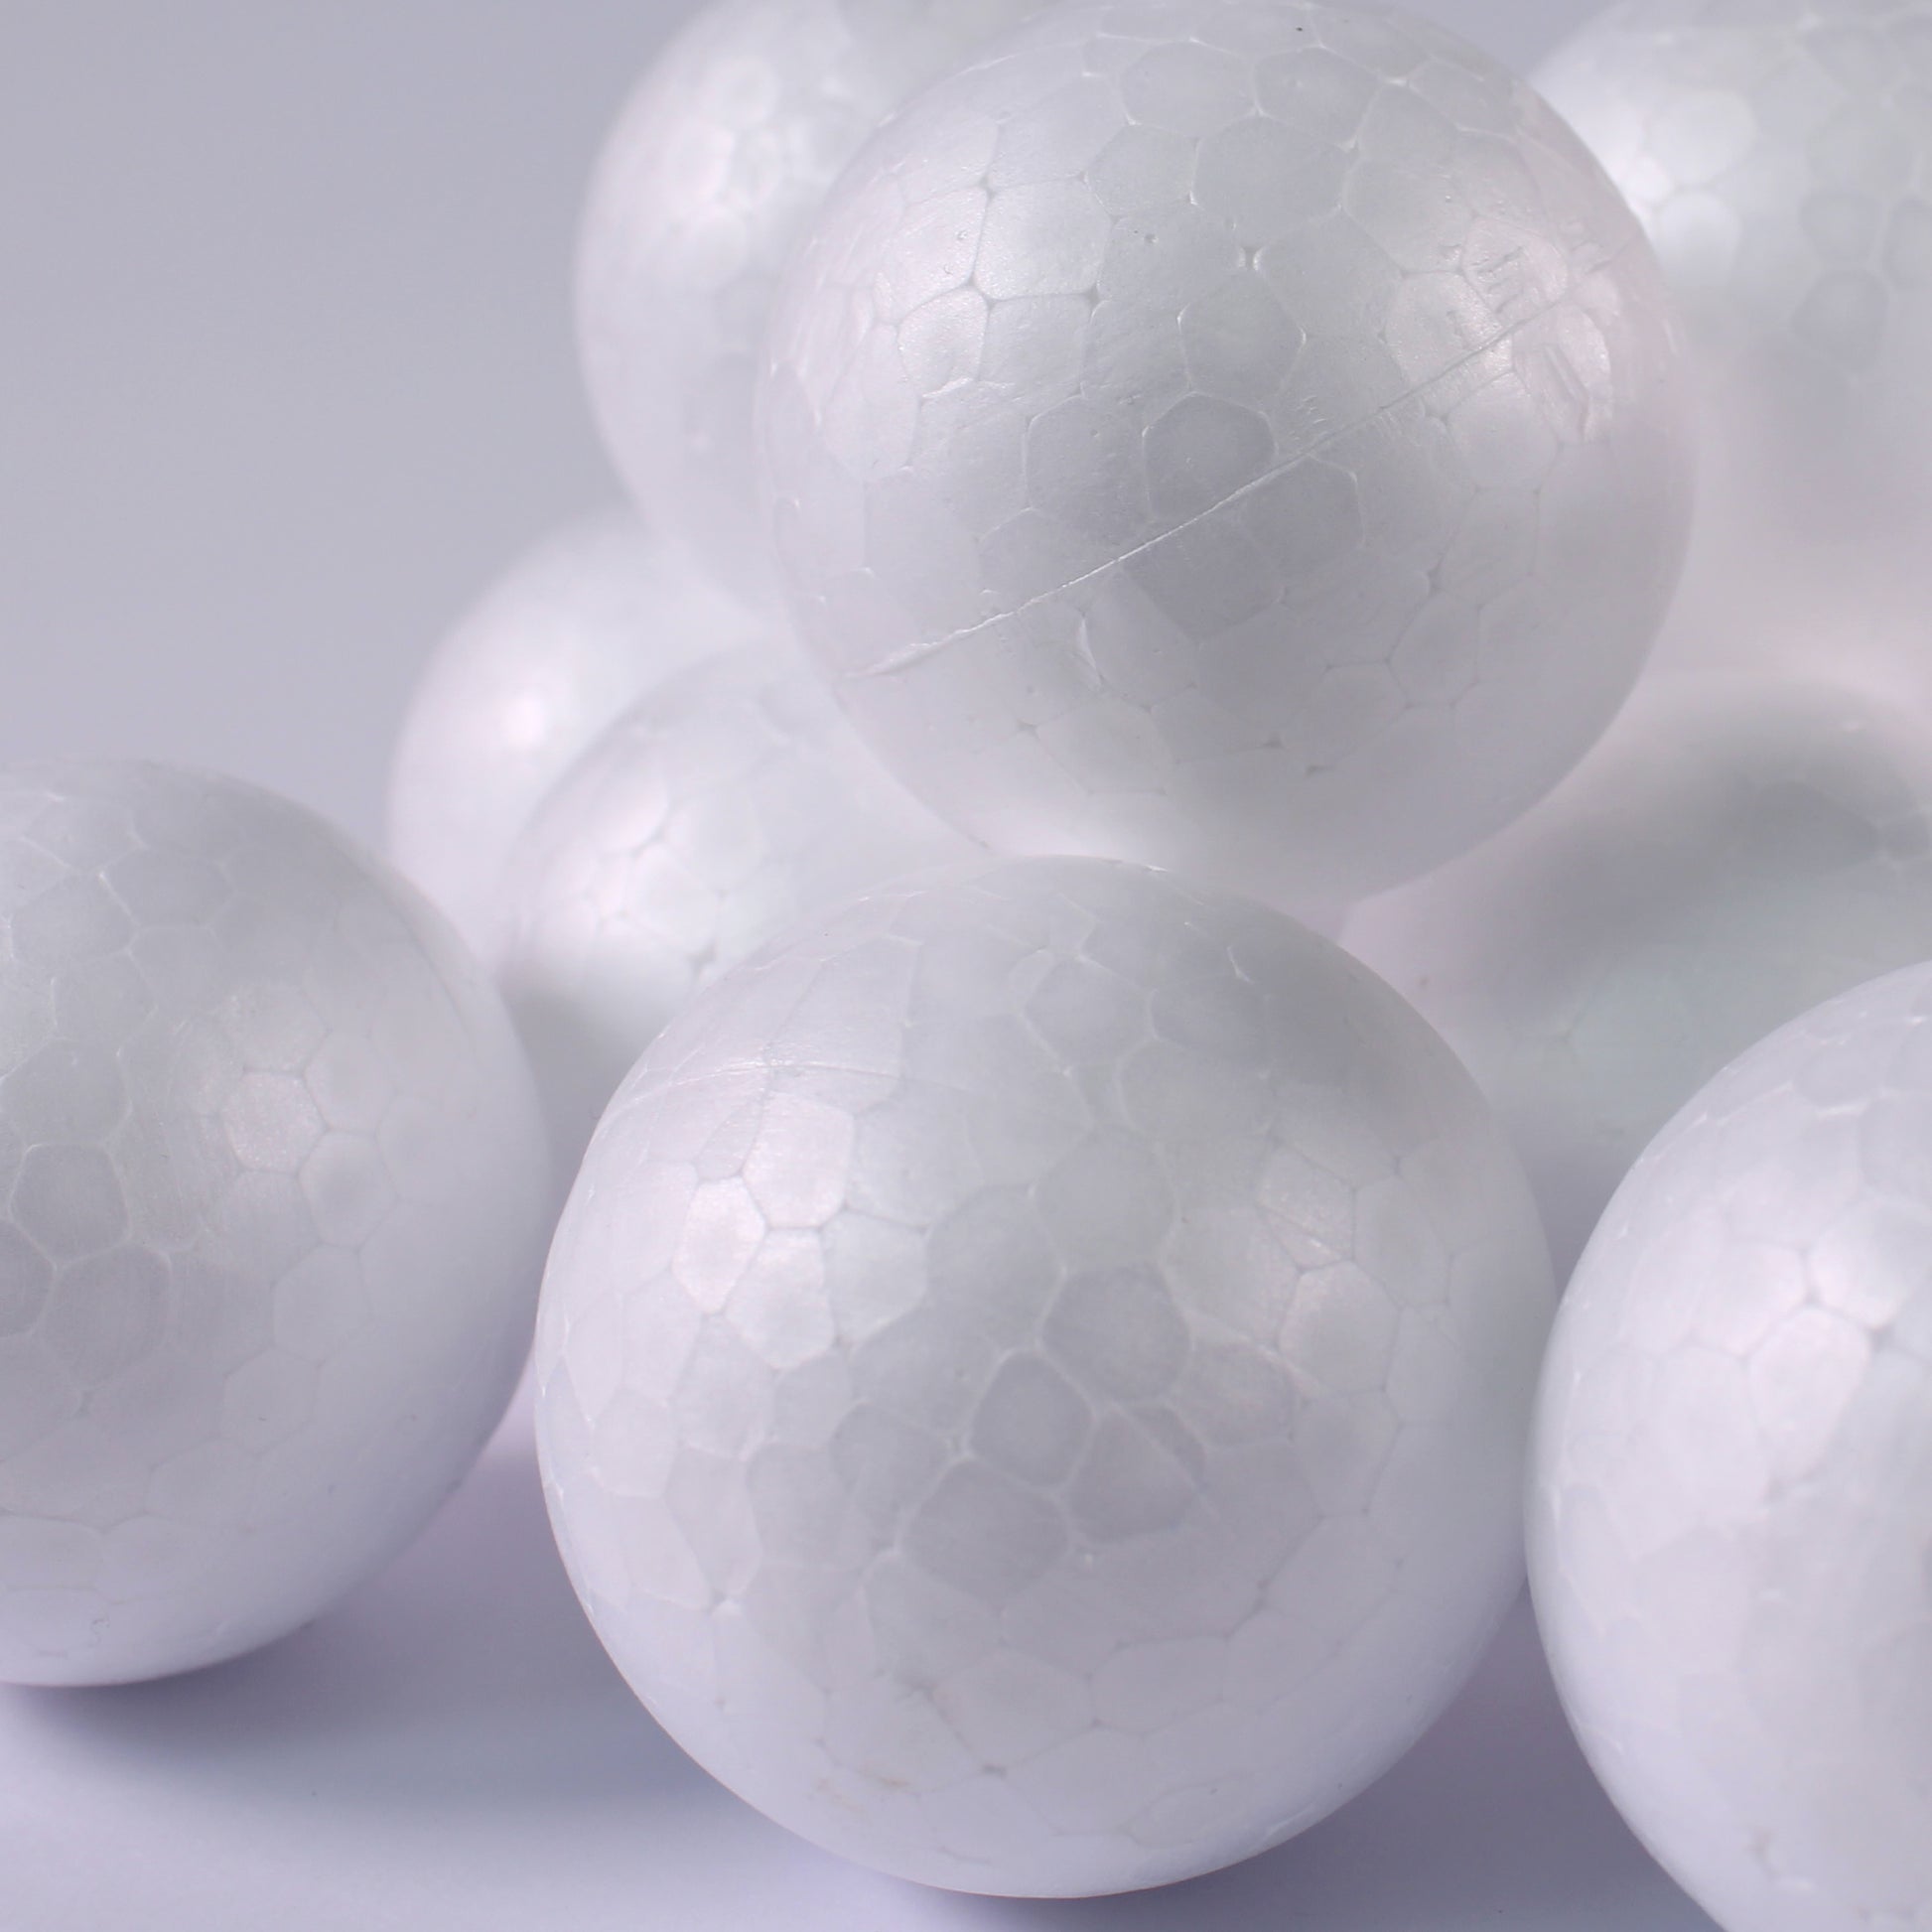 30mm polystyrene balls